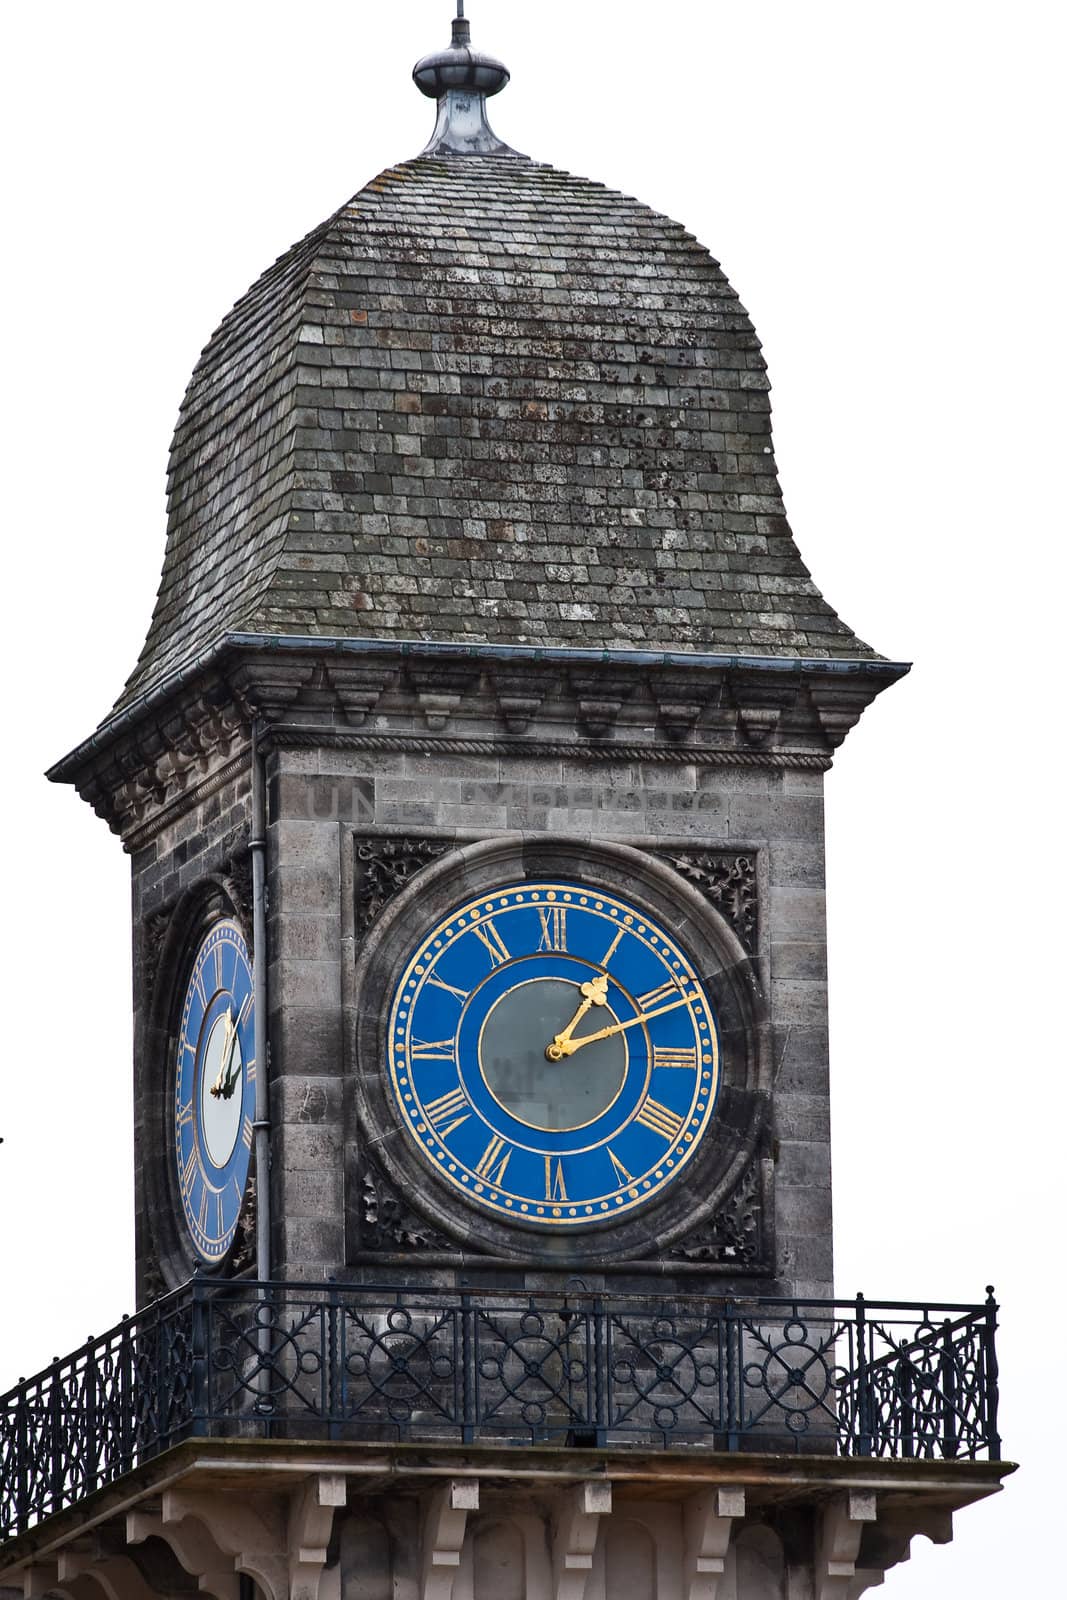 Tower clock of Dunrobin castle, Scotland, Sutherland